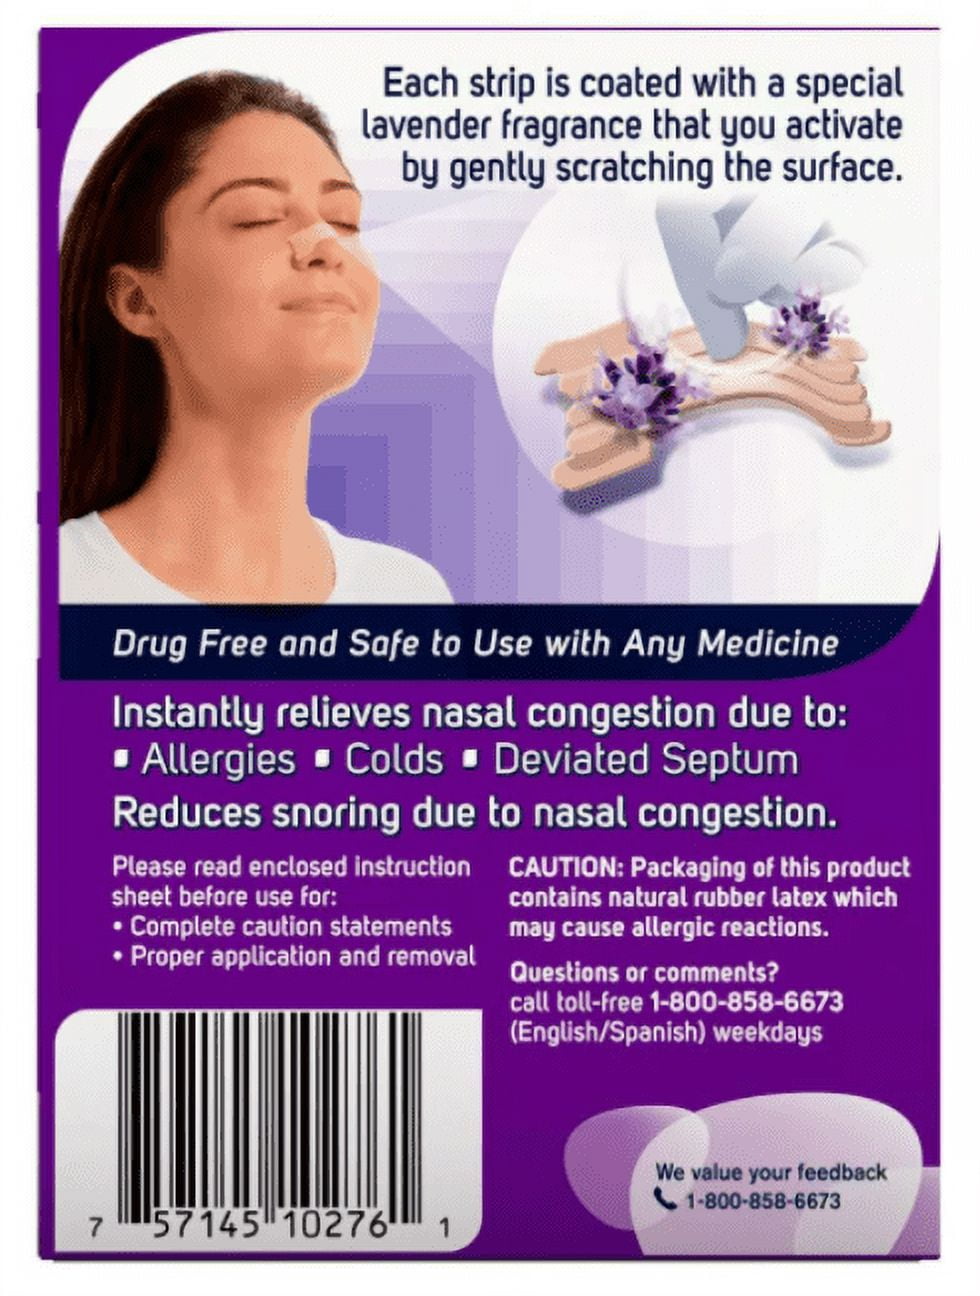 FDA Issues Warning Letter To Maker Of Scent Inhalant 'Nose Slap